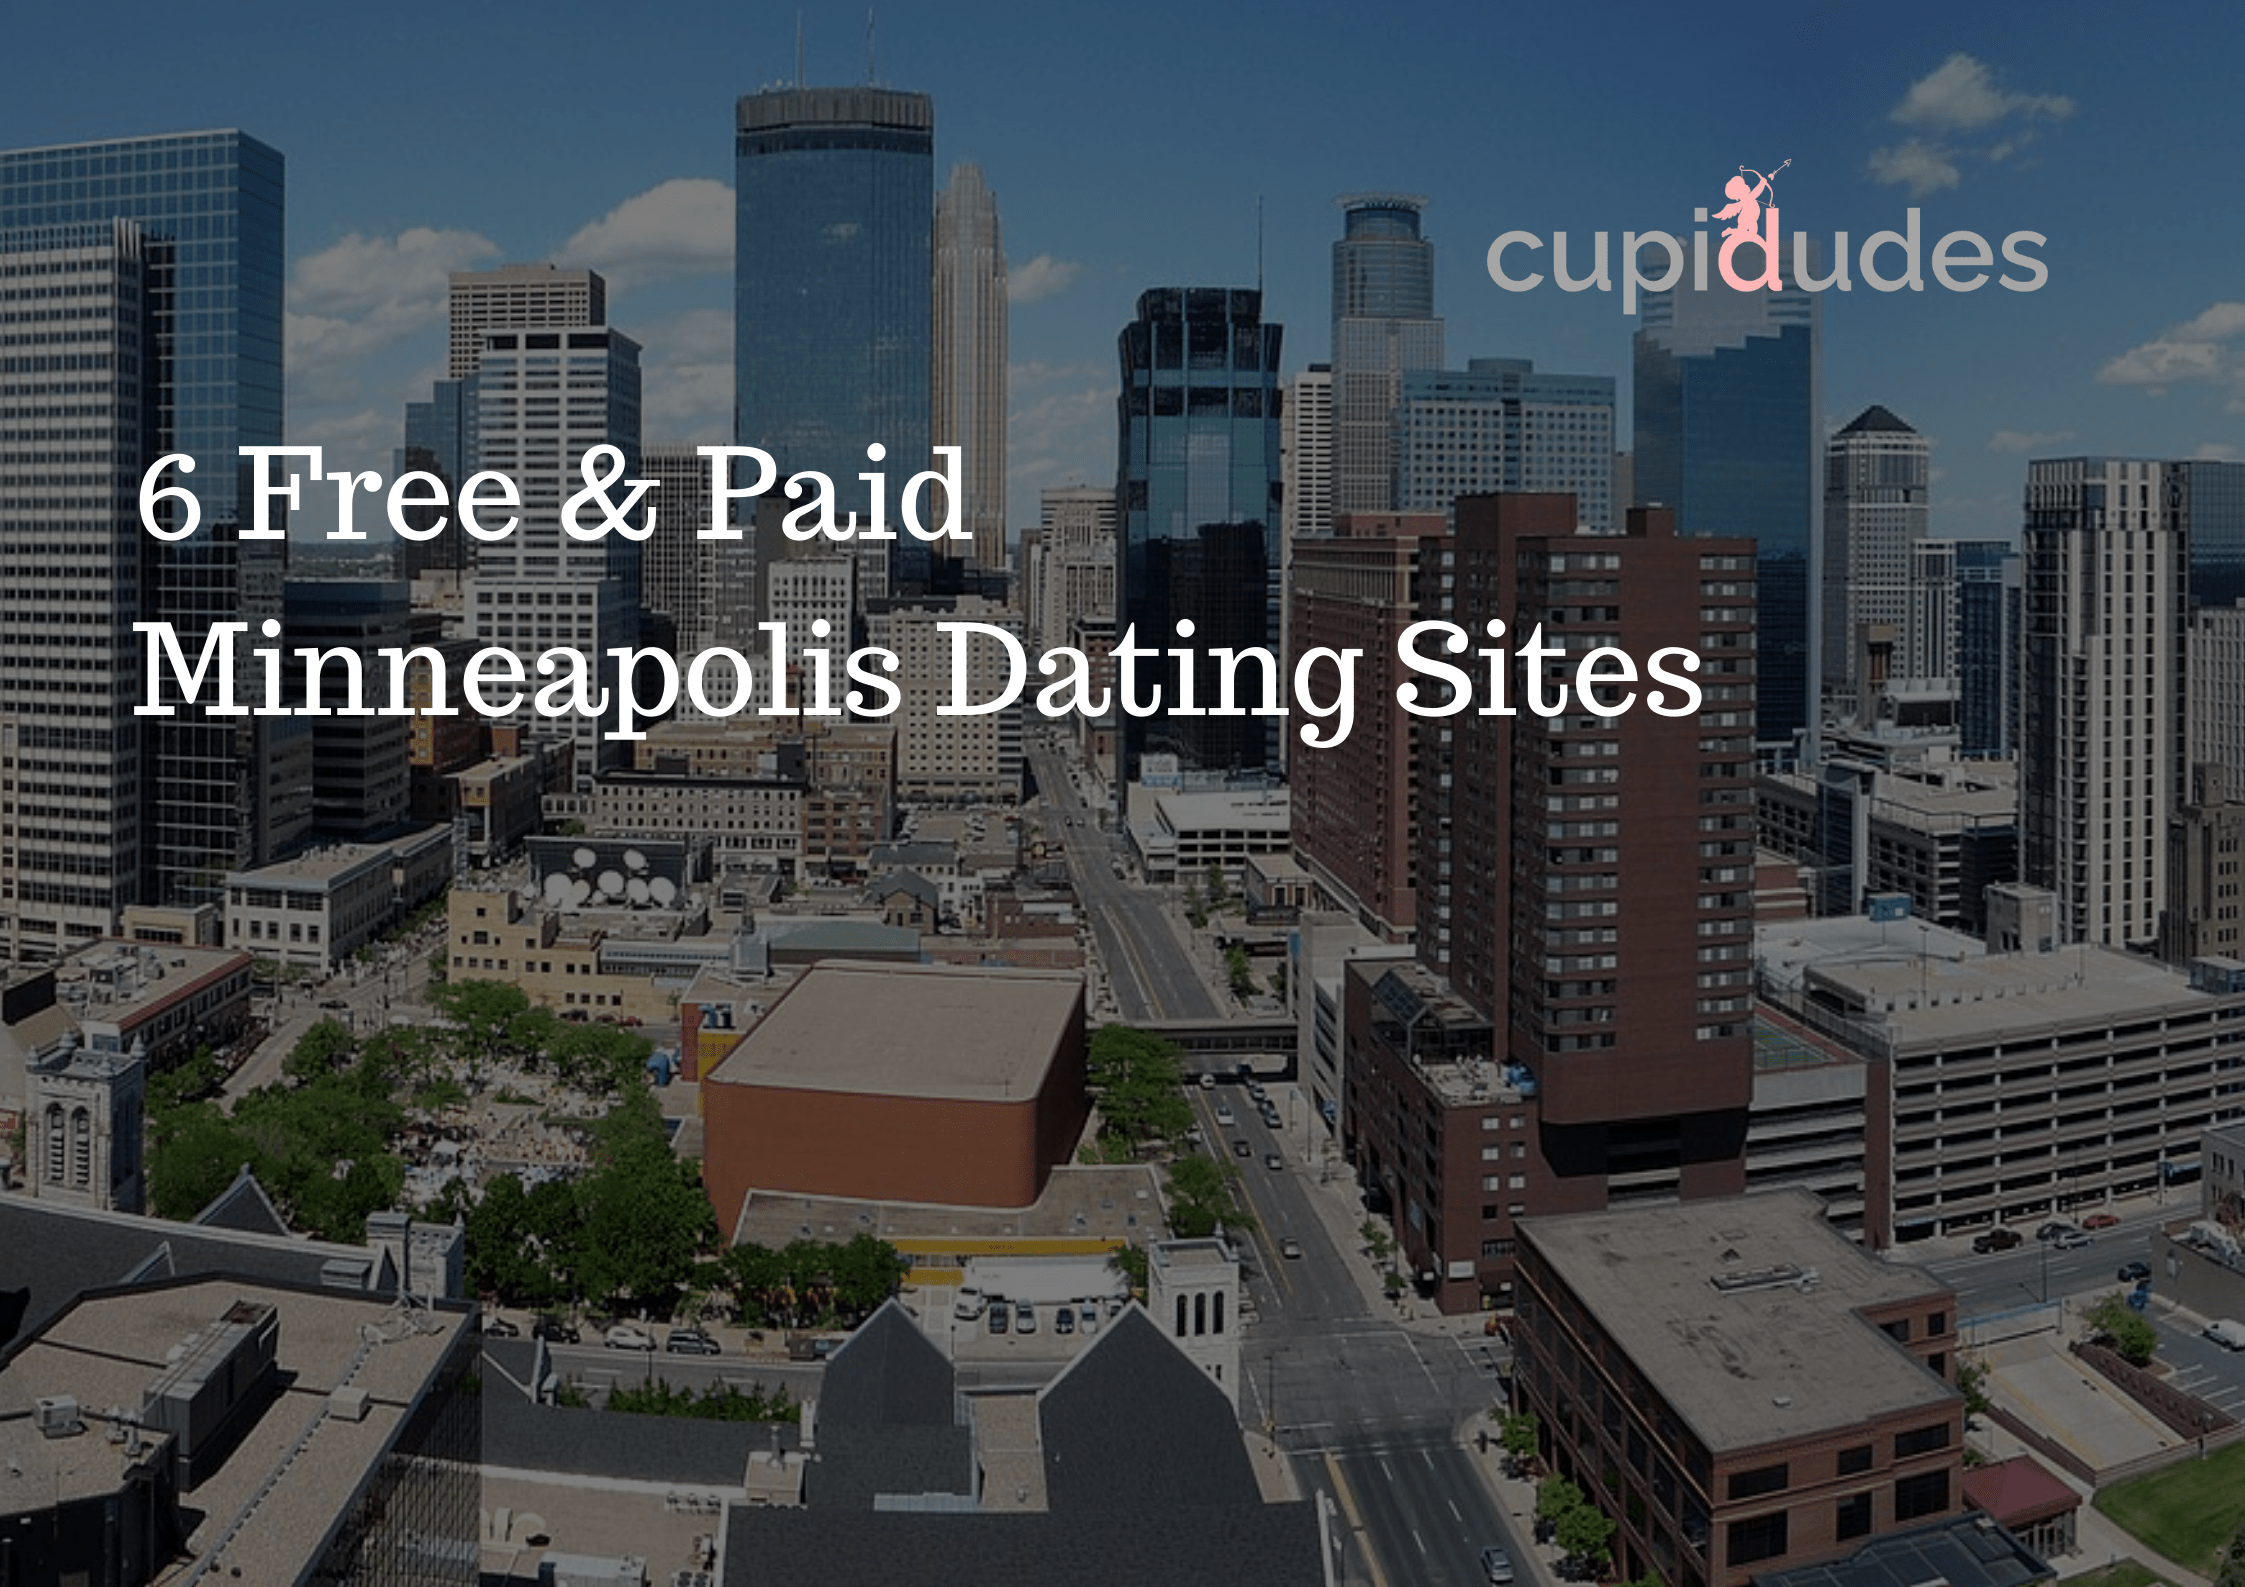 Online dating sites in Minneapolis